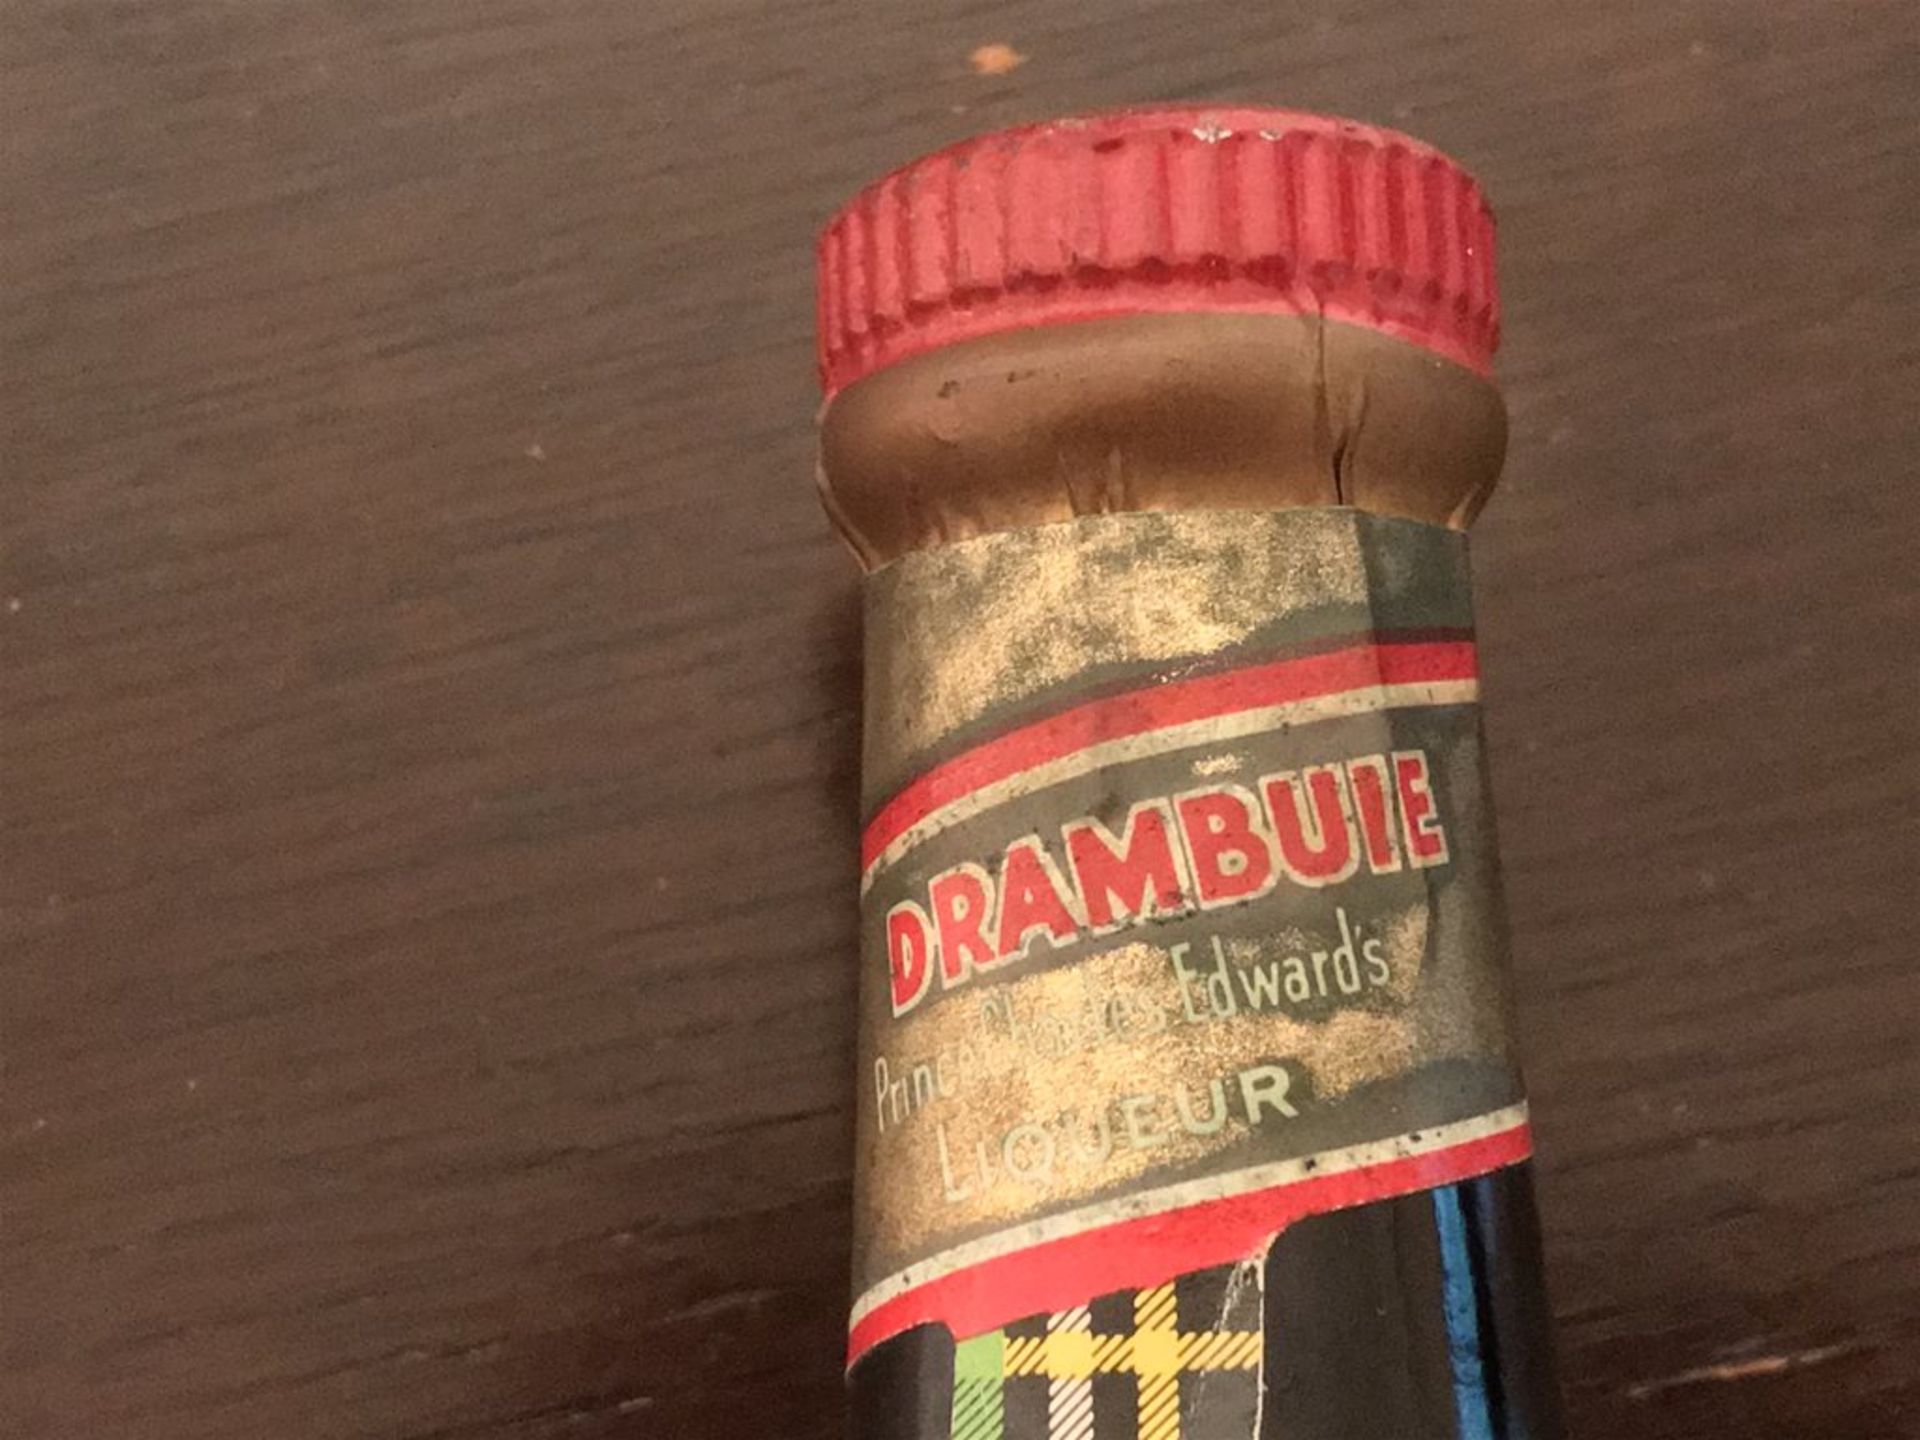 Vintage Bottle of Drambuie Prince Charles Edwards Liqueur Sealed - Circa 1970 - Image 2 of 4